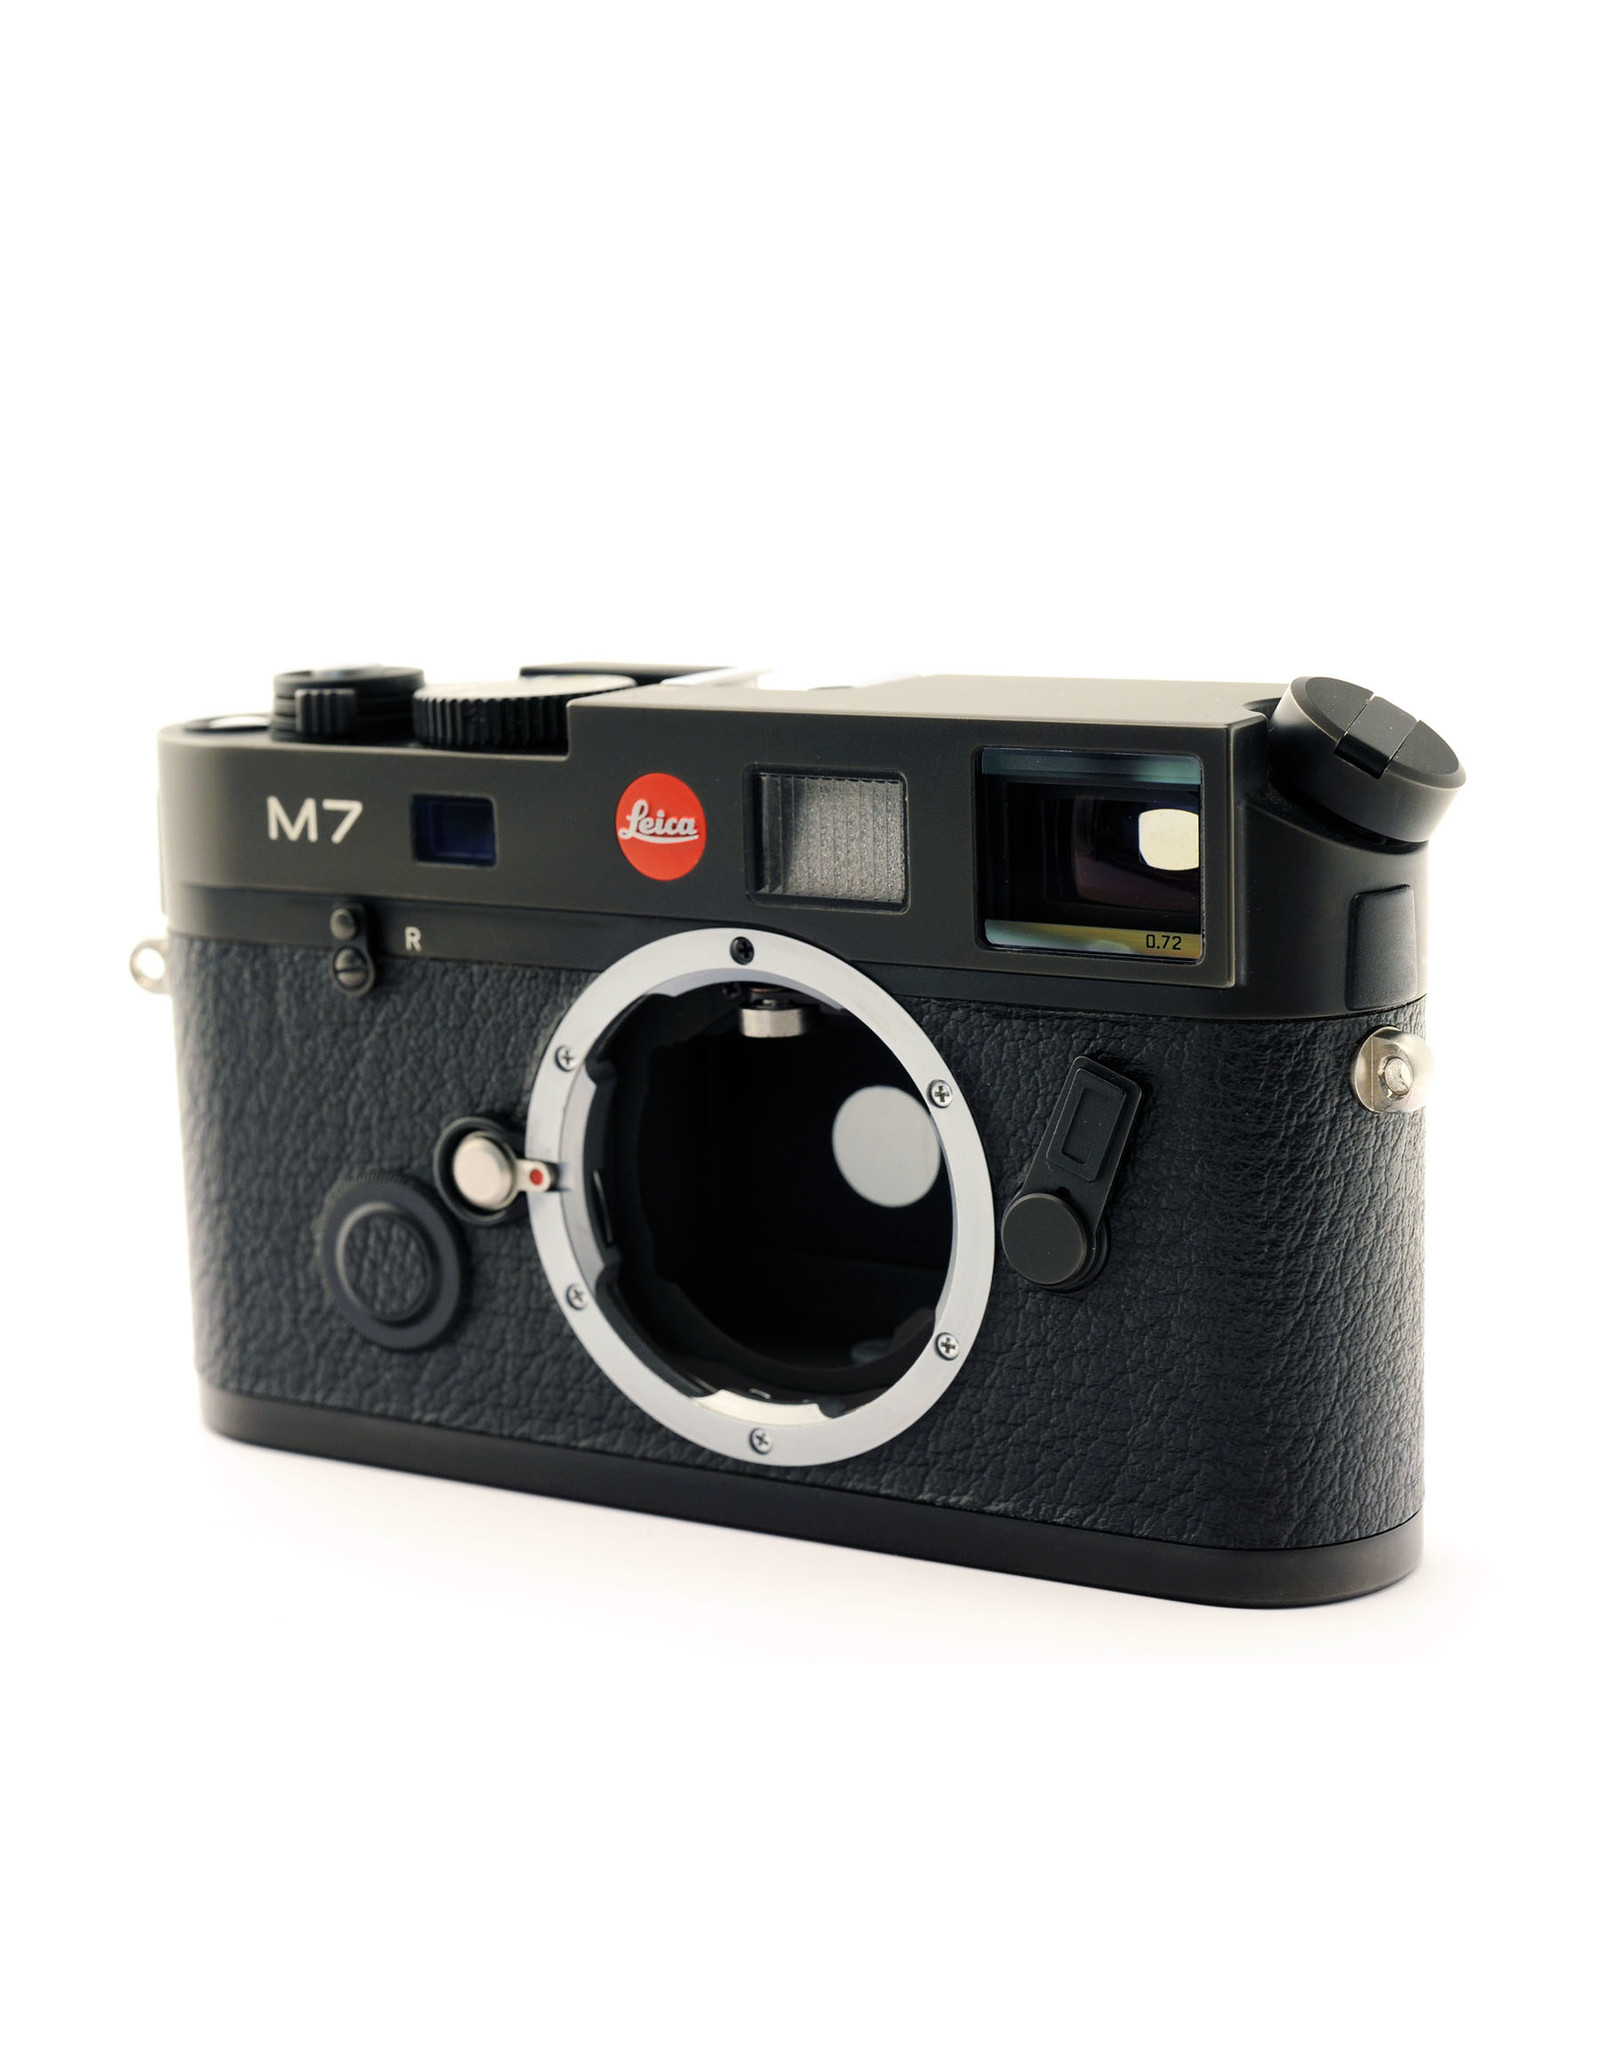 Leica Leica M7 0.72 Black  ALC134202